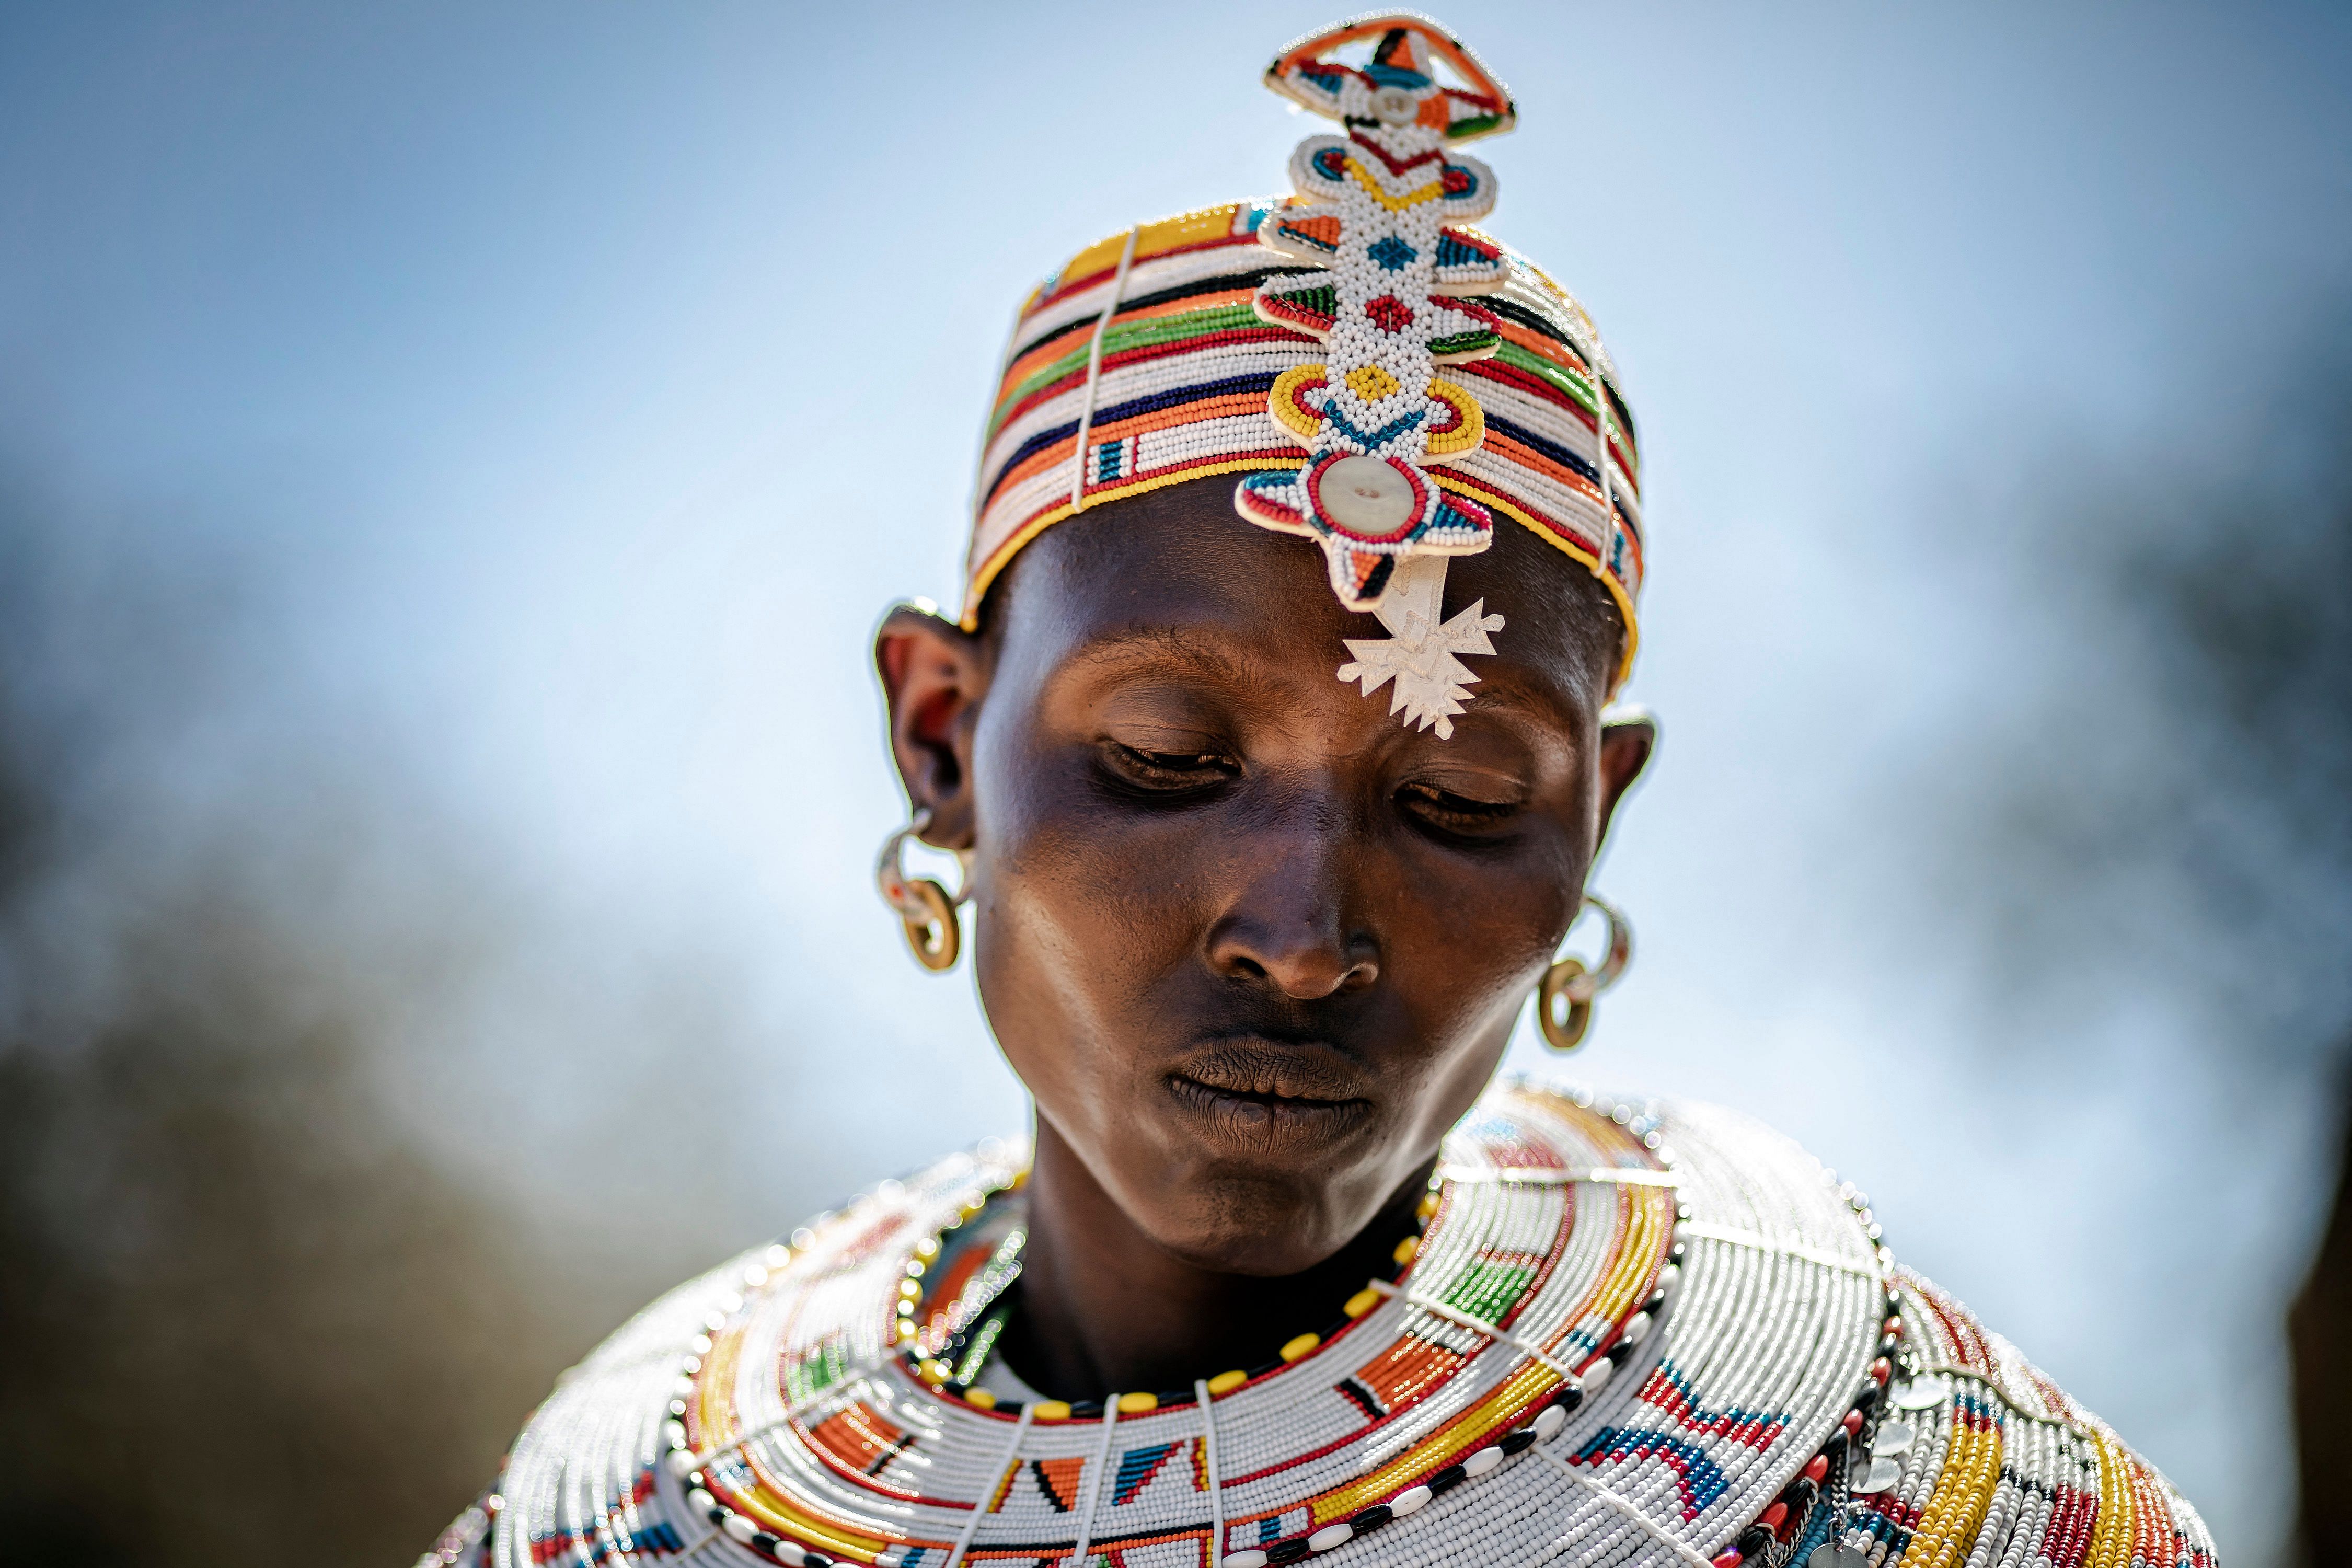 Bariti Leorto, a Samburu woman, works making traditional Samburu ornaments and jewelry out of beads next to a house in Kalama Conservancy, Samburu County, Kenya. Credit: AFP Photo